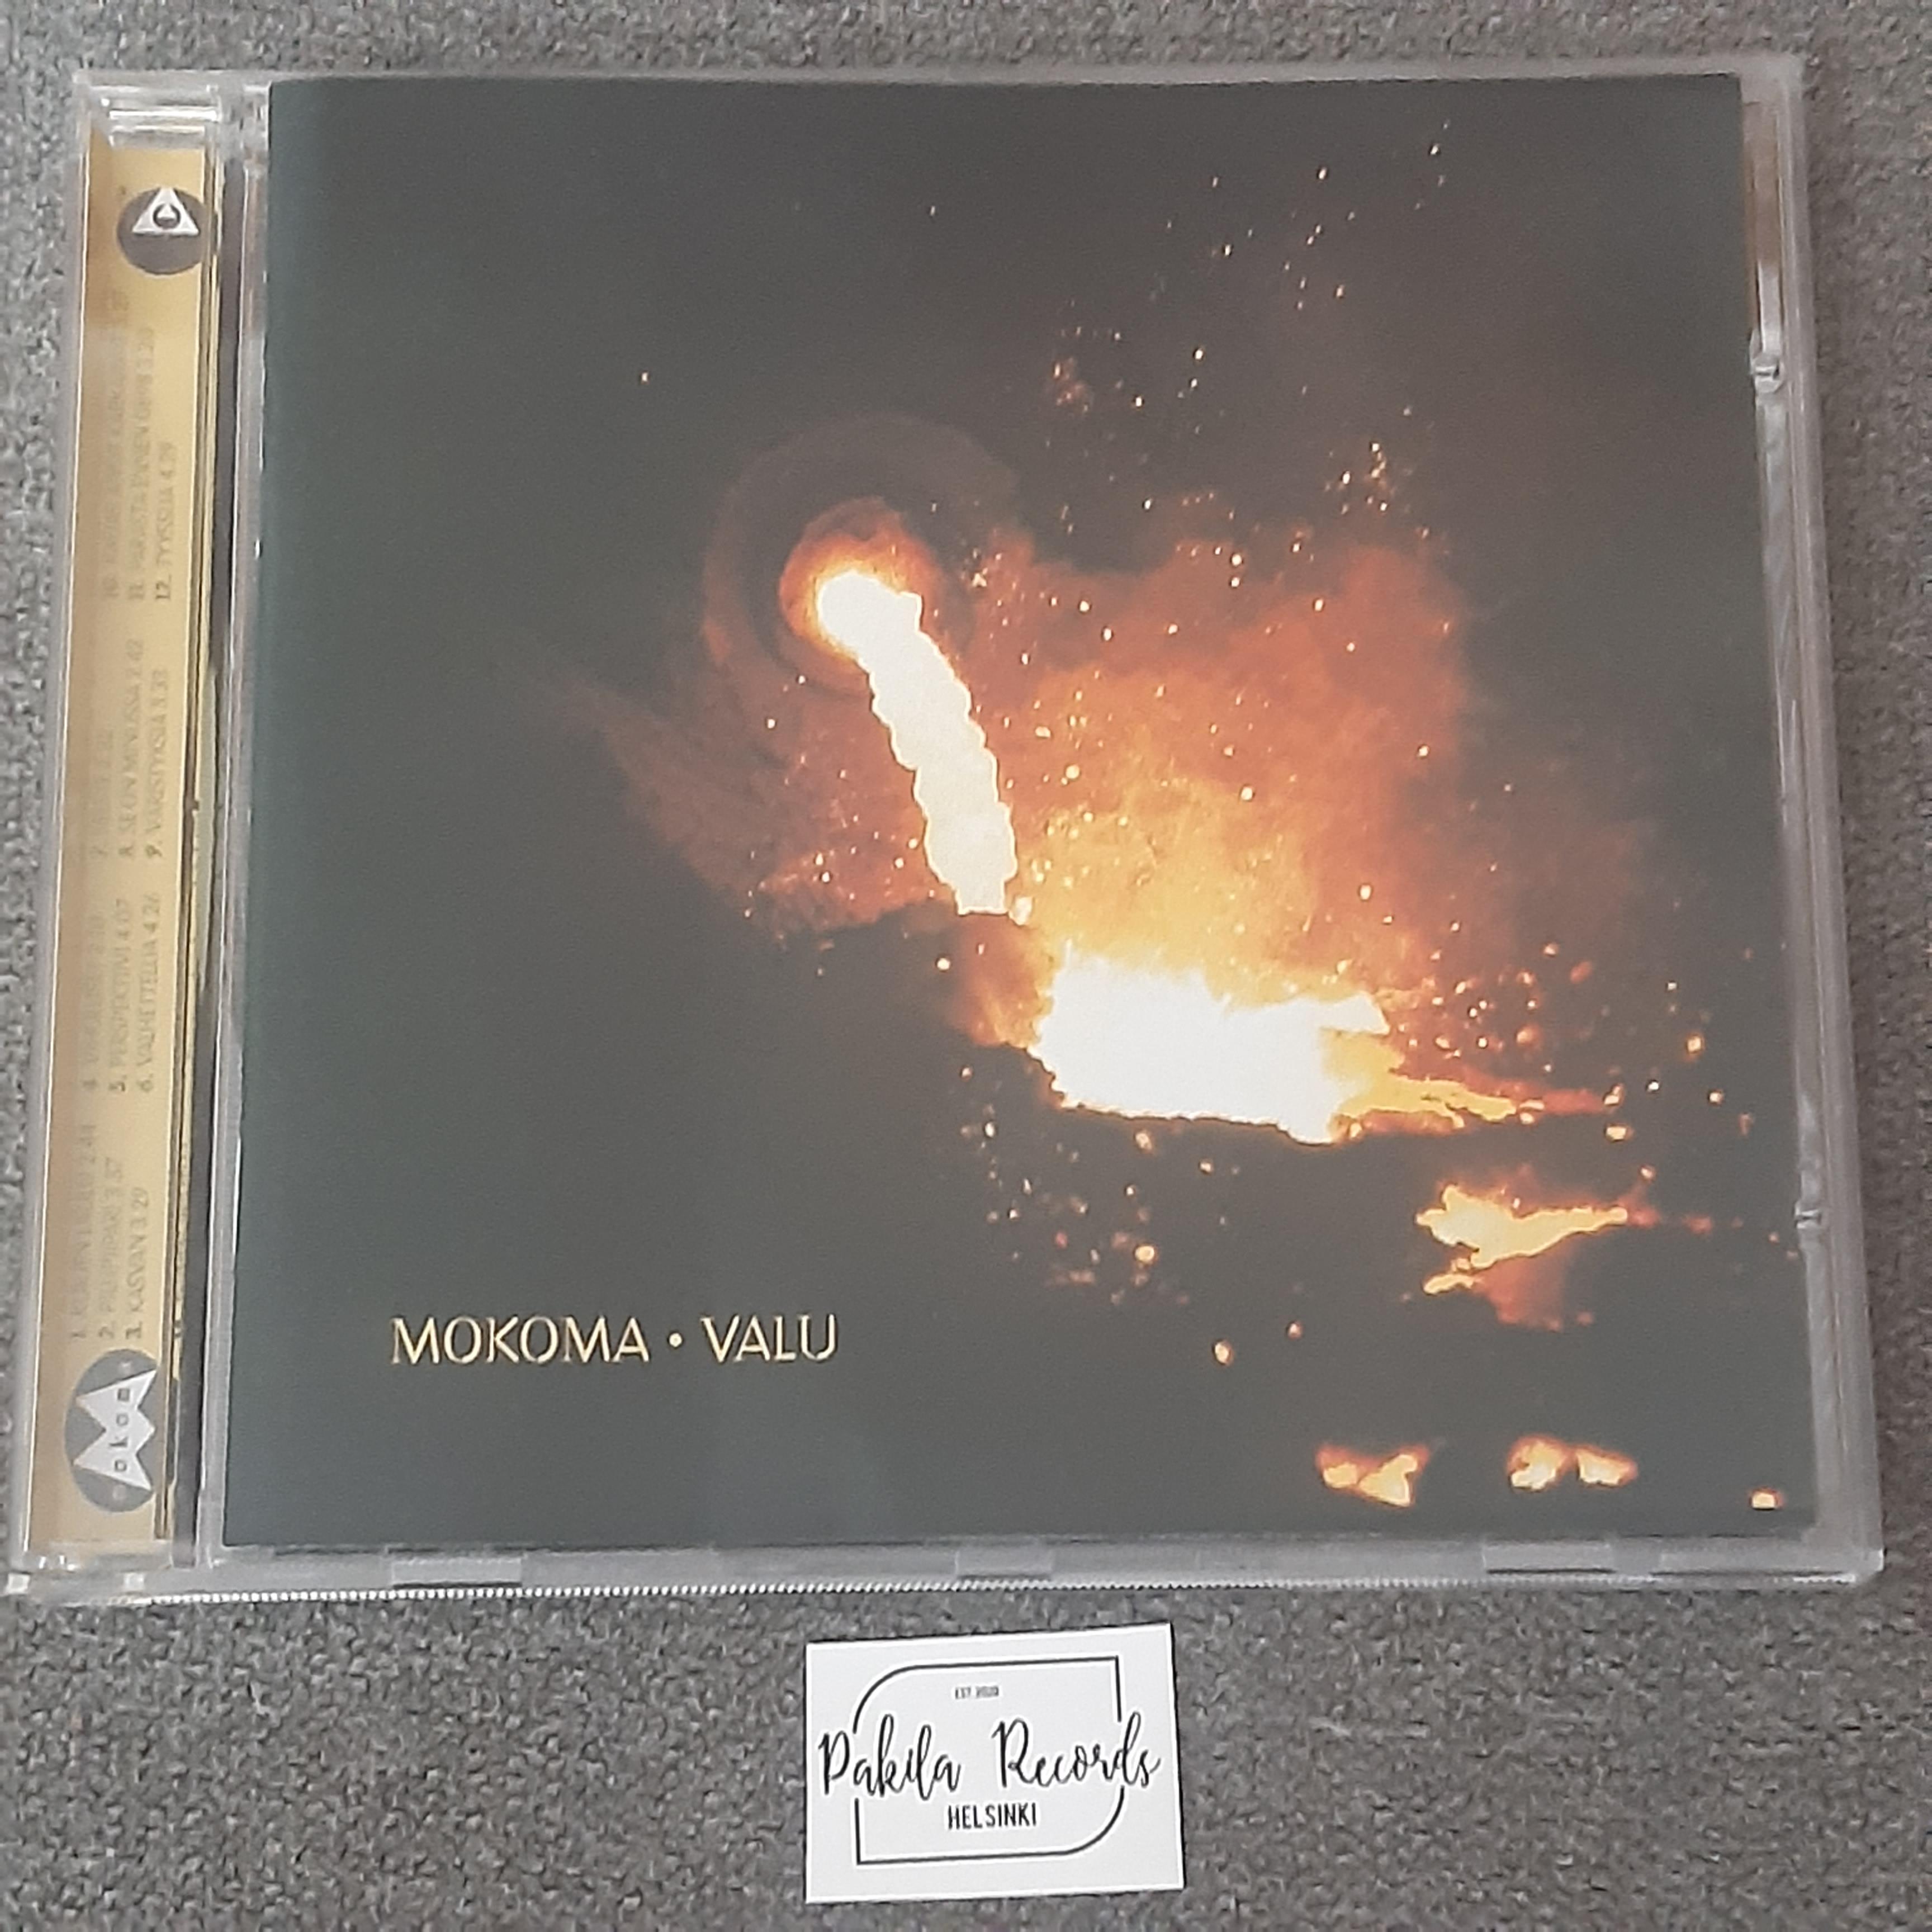 Mokoma - Valu - CD (käytetty)